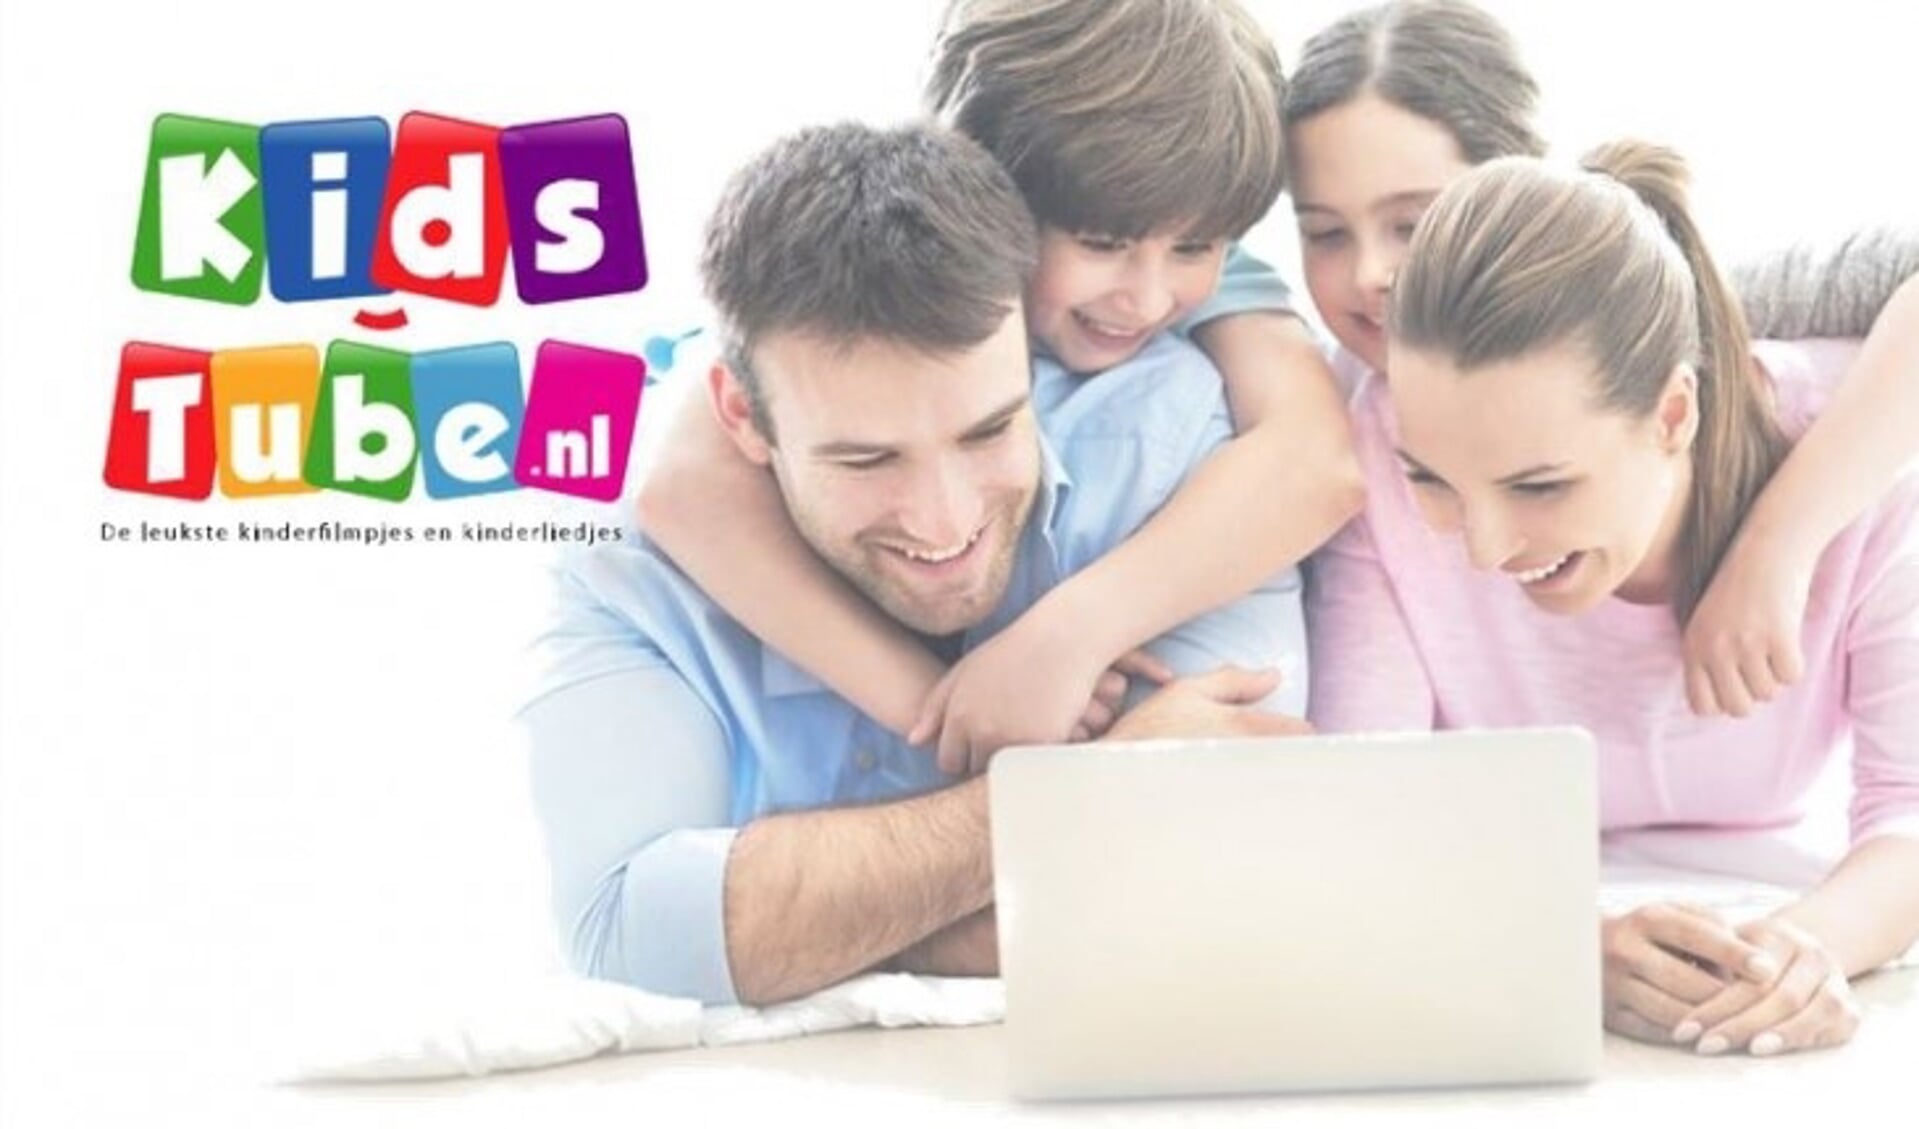 Kids-tube.nl: voor kindvriendelijke films en liedjes